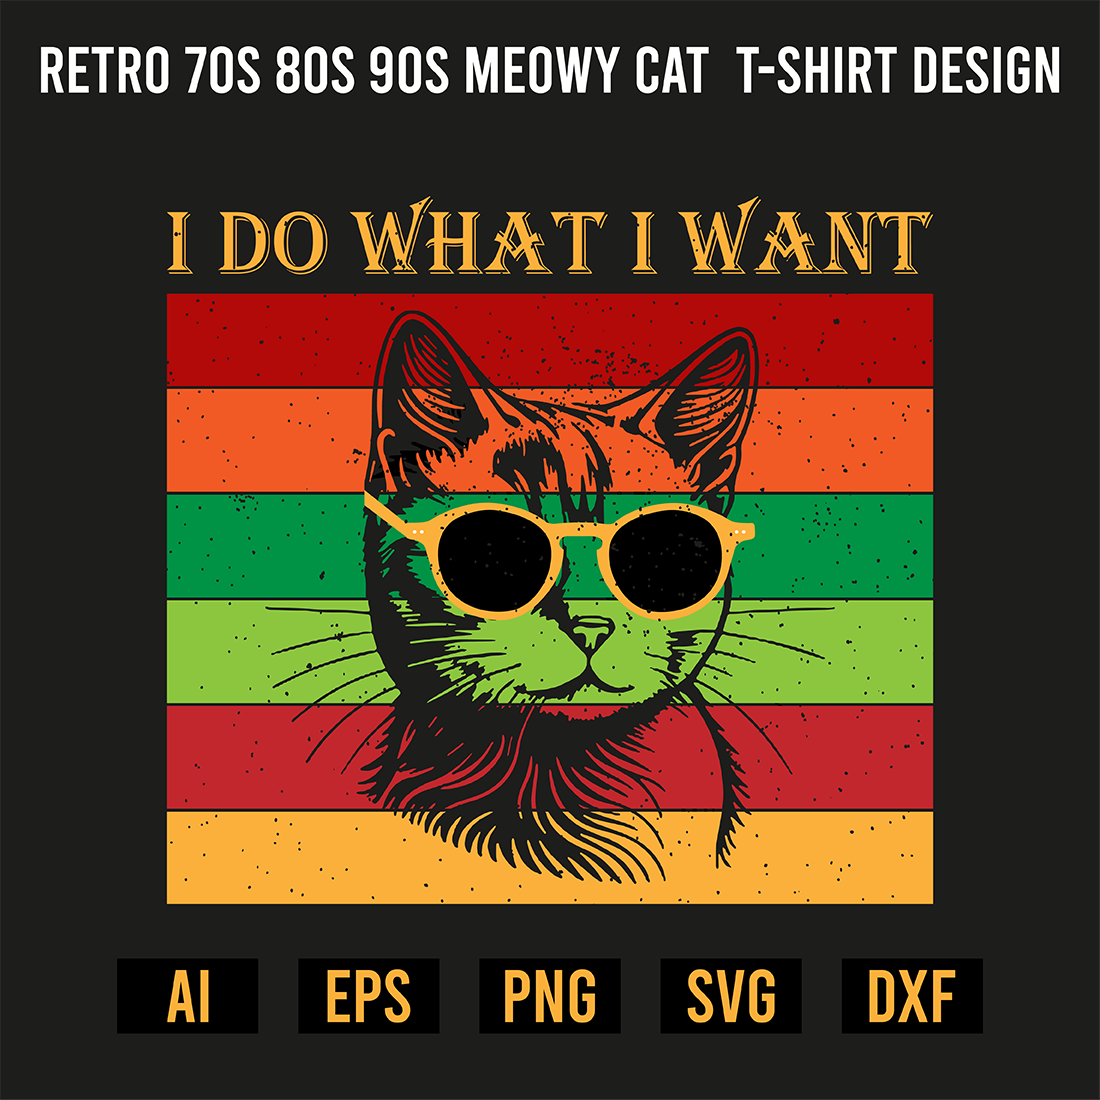 Retro 70s 80s 90s Meowy Cat T-Shirt Design preview image.